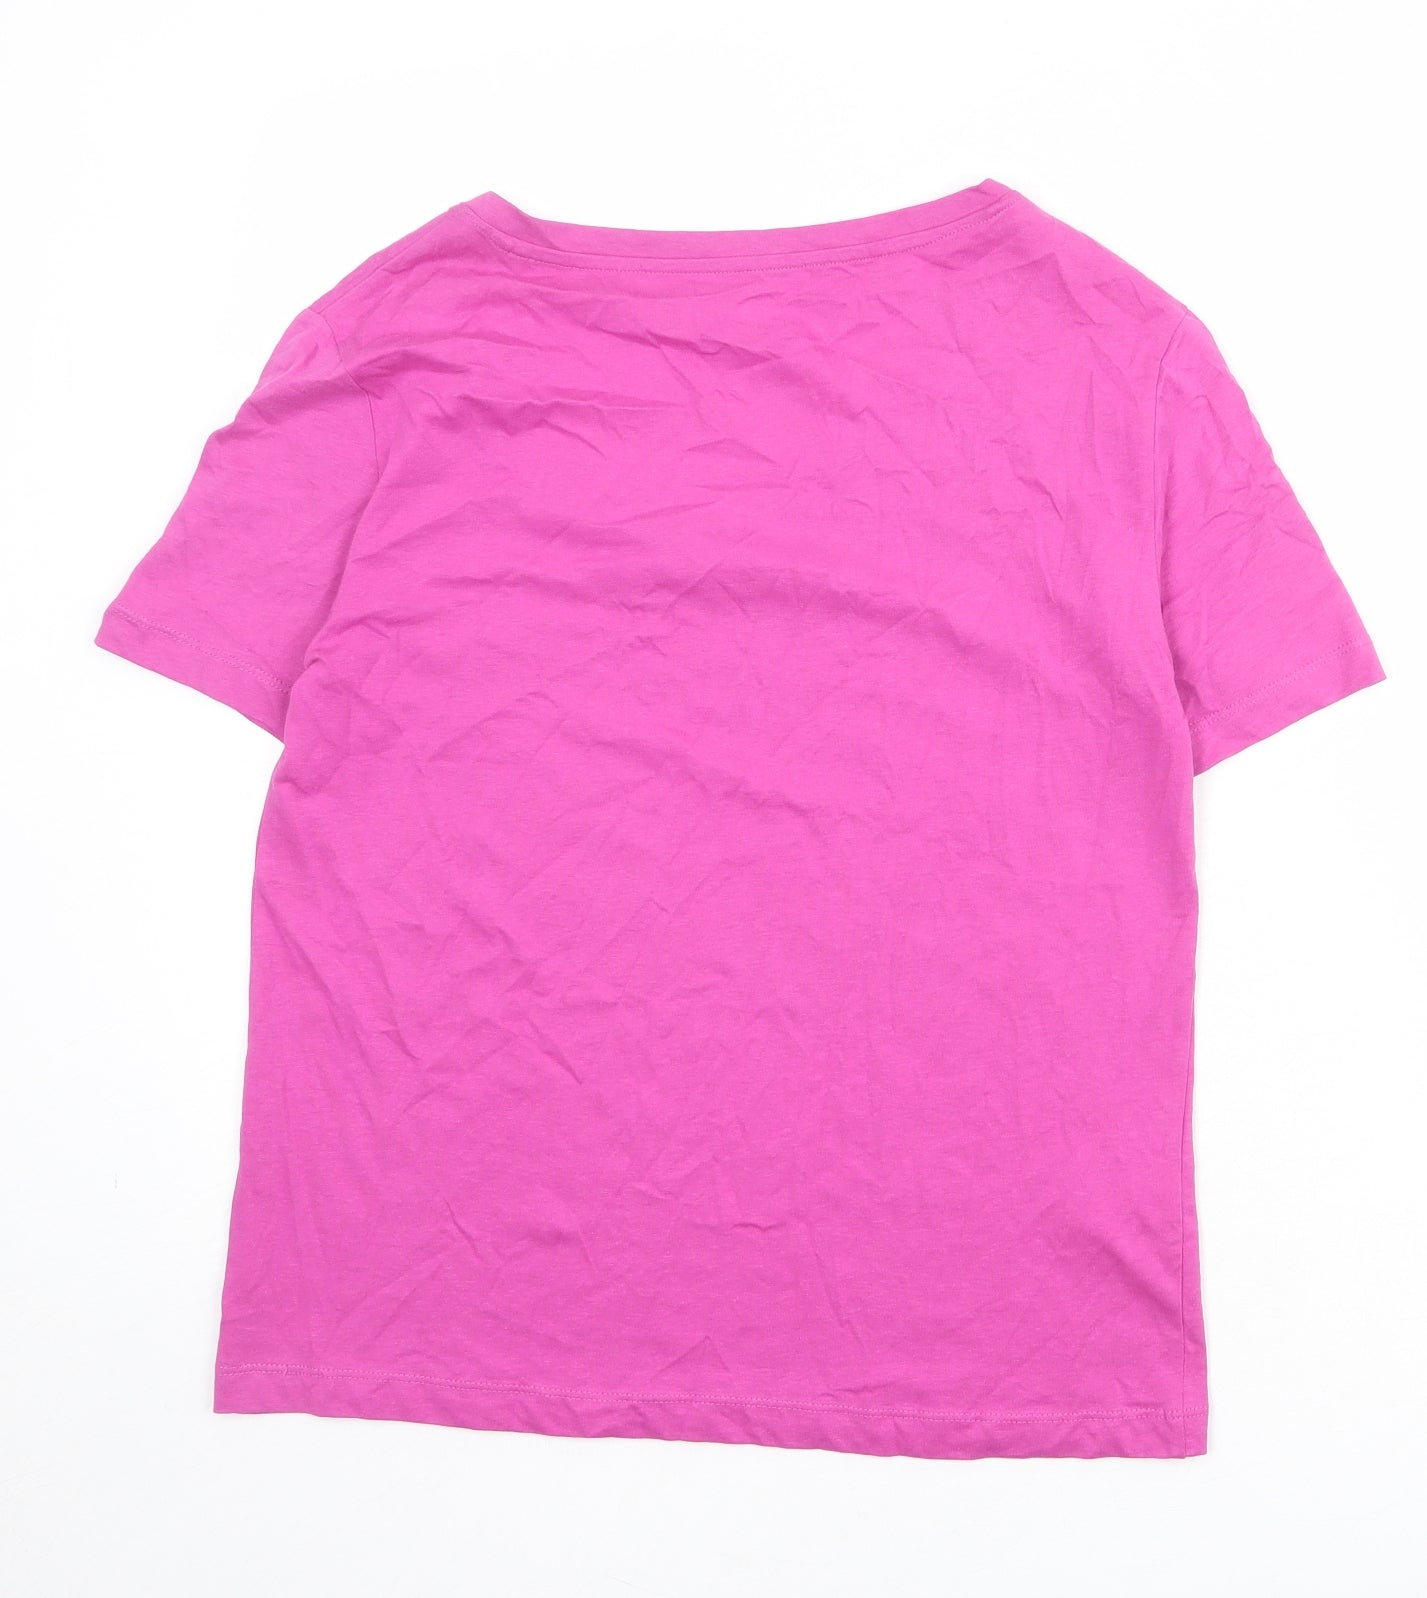 Mango Womens Pink 100% Cotton Basic T-Shirt Size M V-Neck